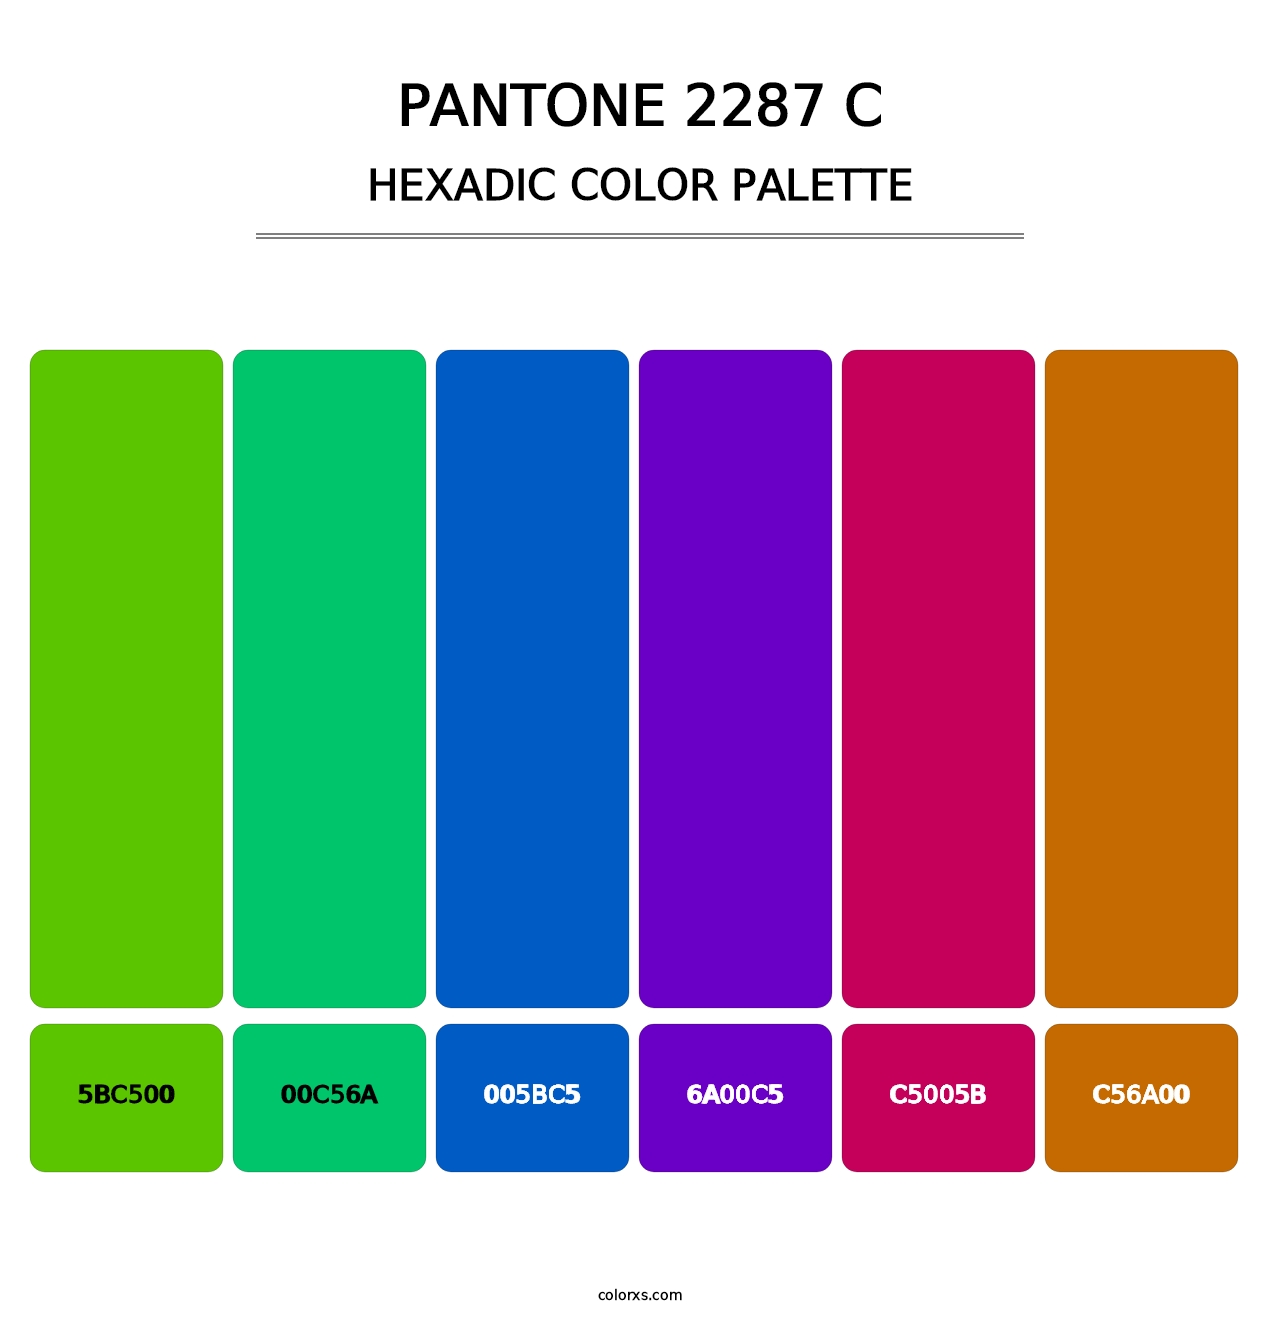 PANTONE 2287 C - Hexadic Color Palette